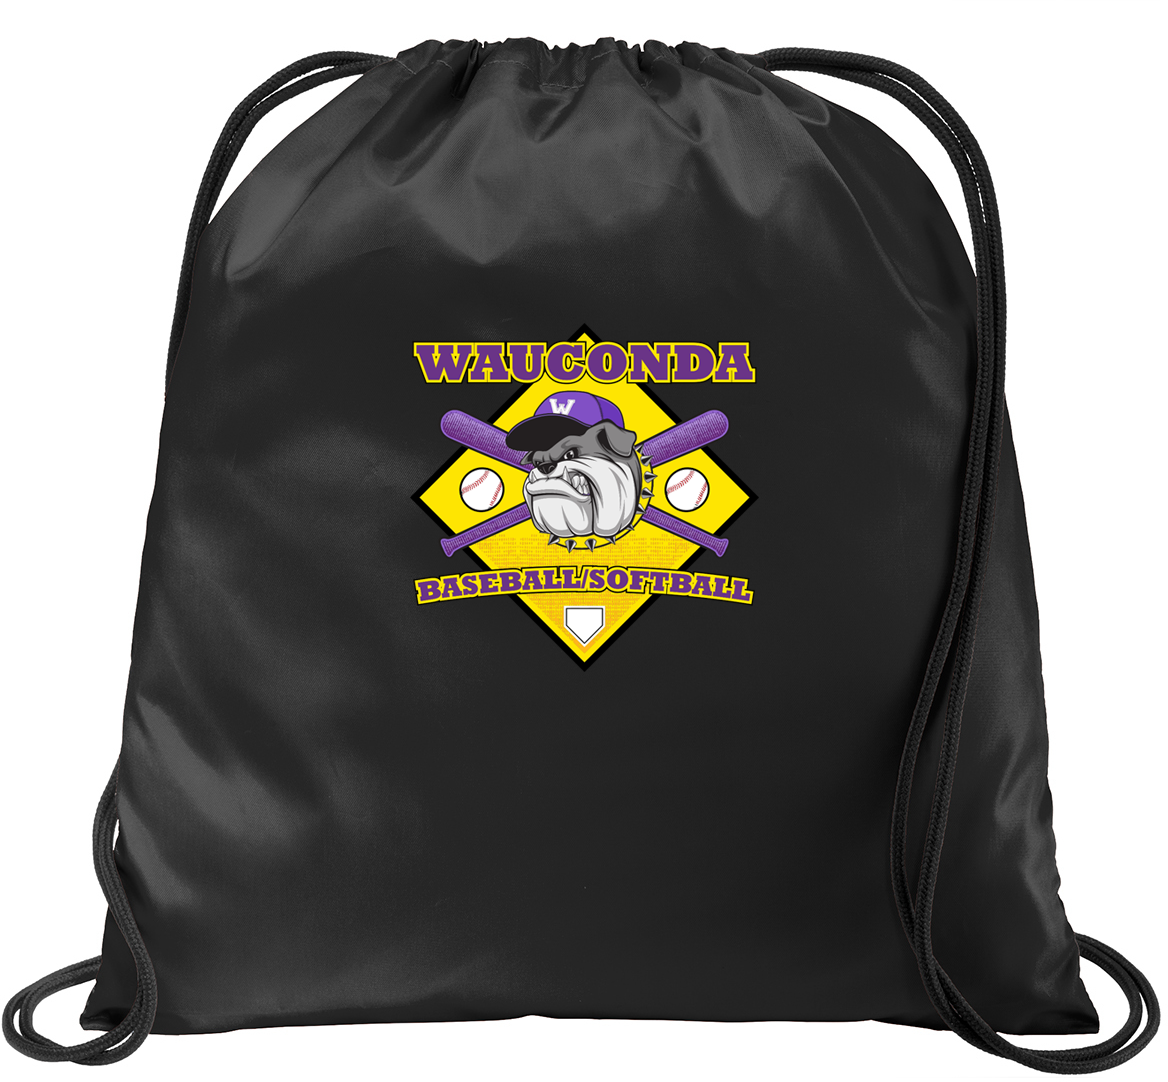 Wauconda Baseball & Softball Cinch Pack